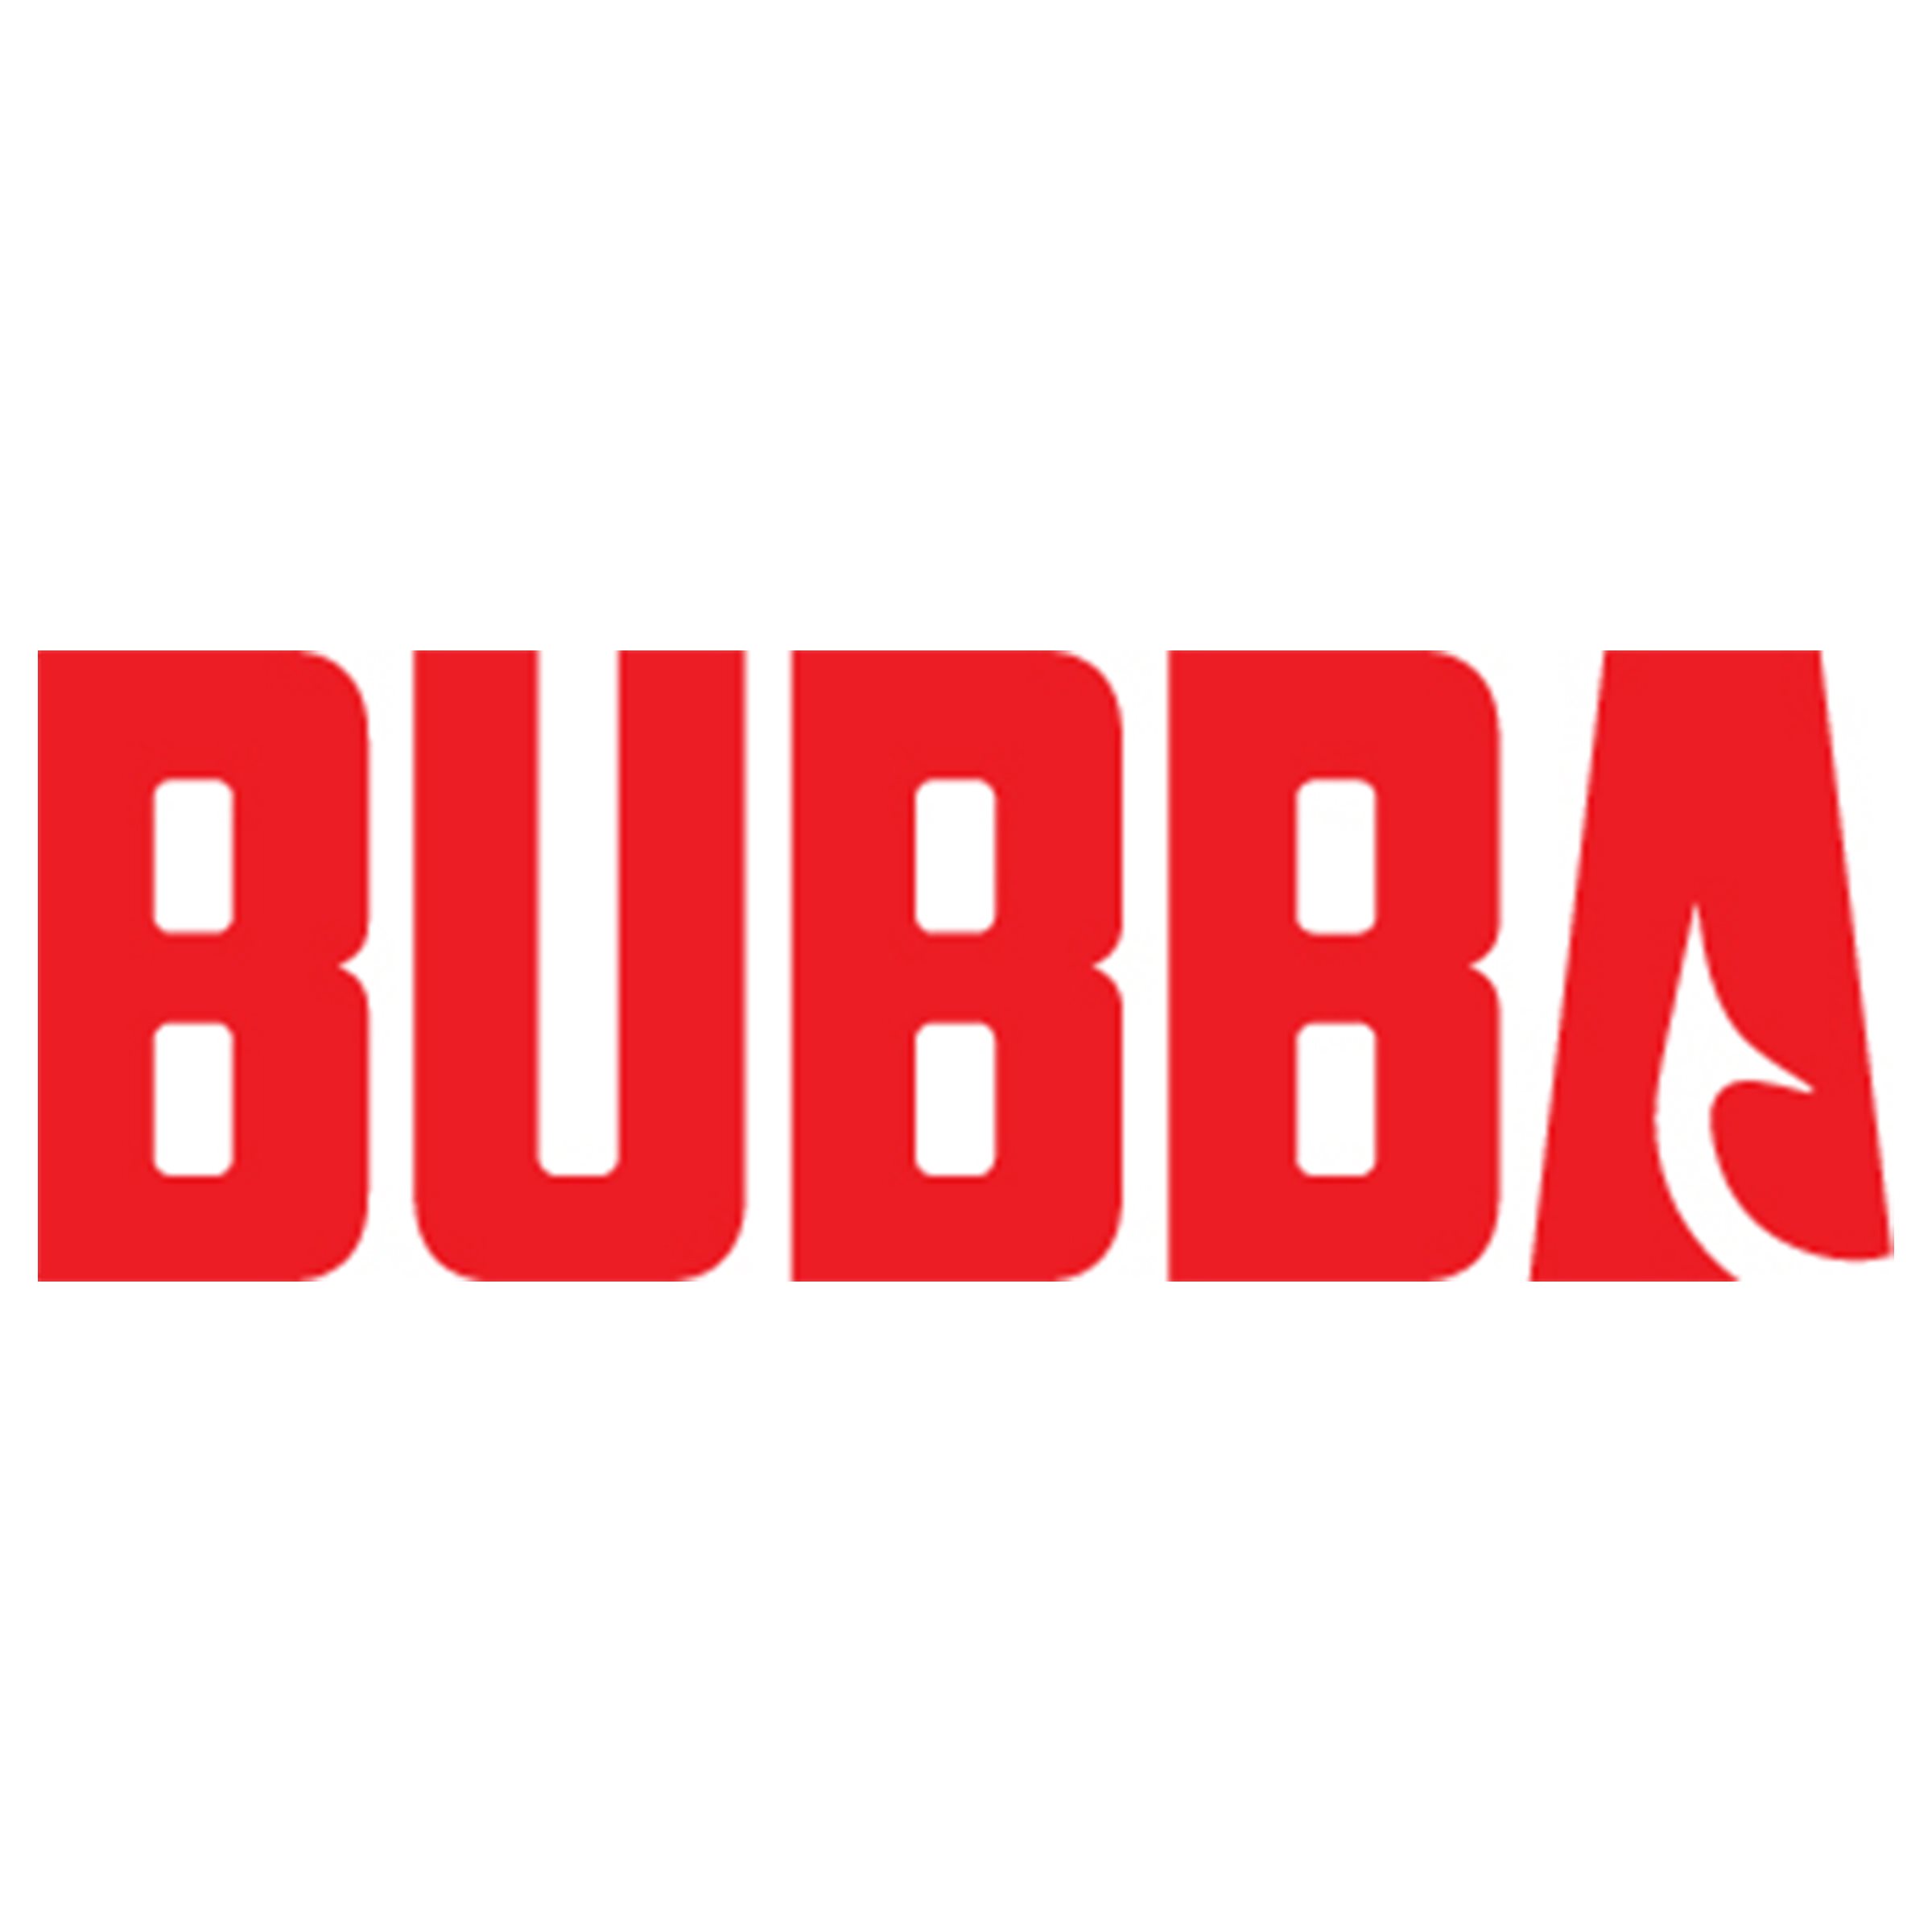 942-Bubba